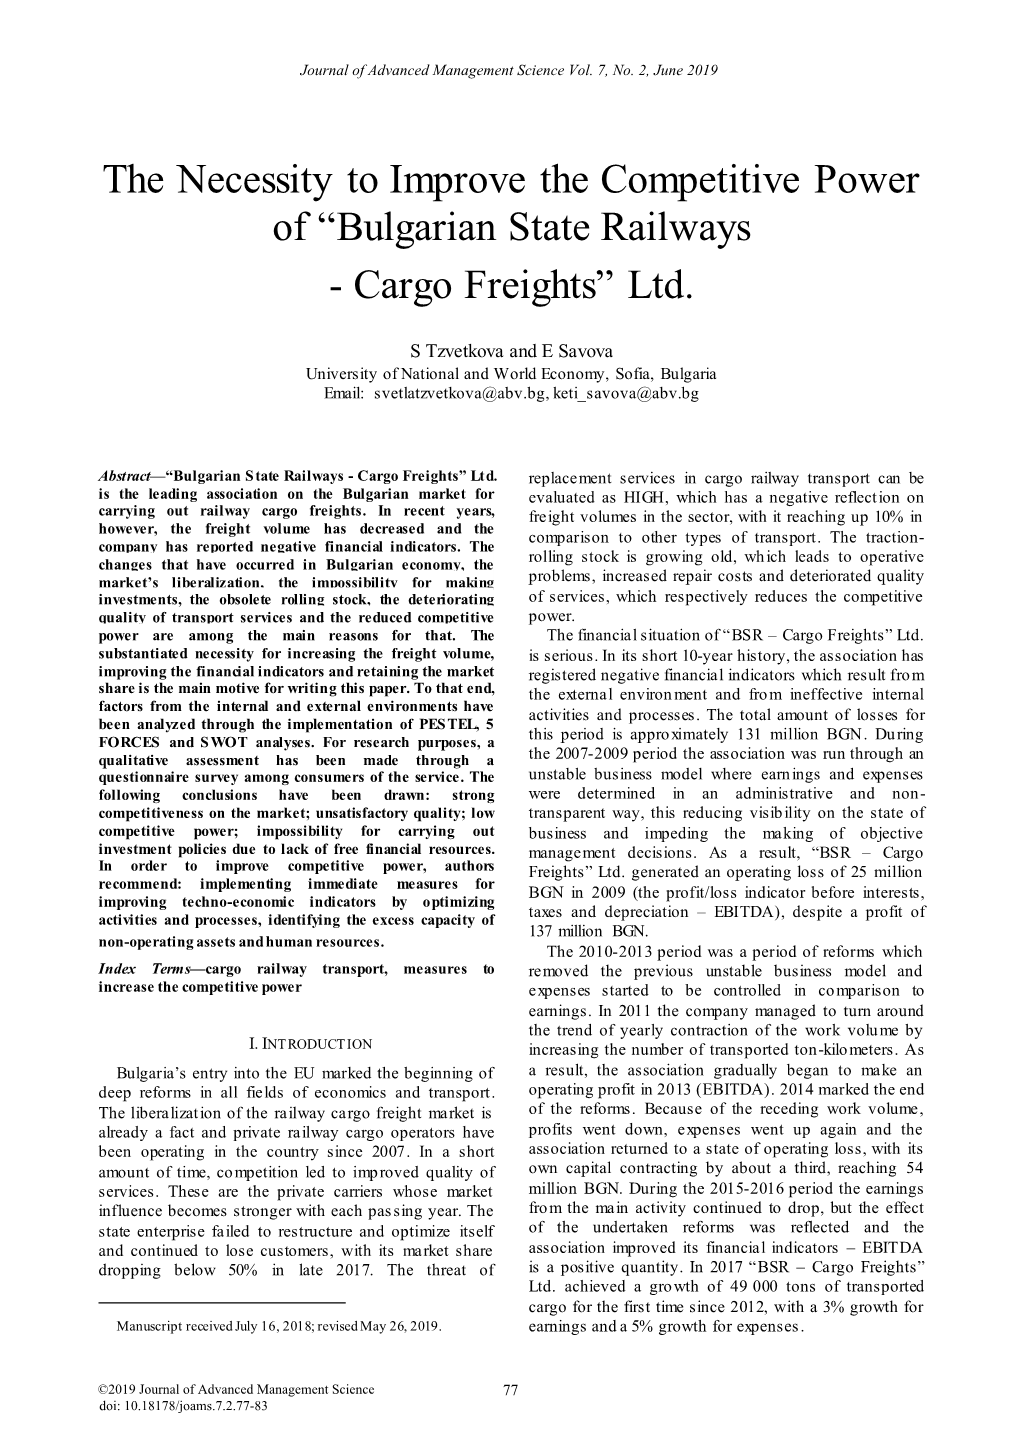 “Bulgarian State Railways - Cargo Freights” Ltd